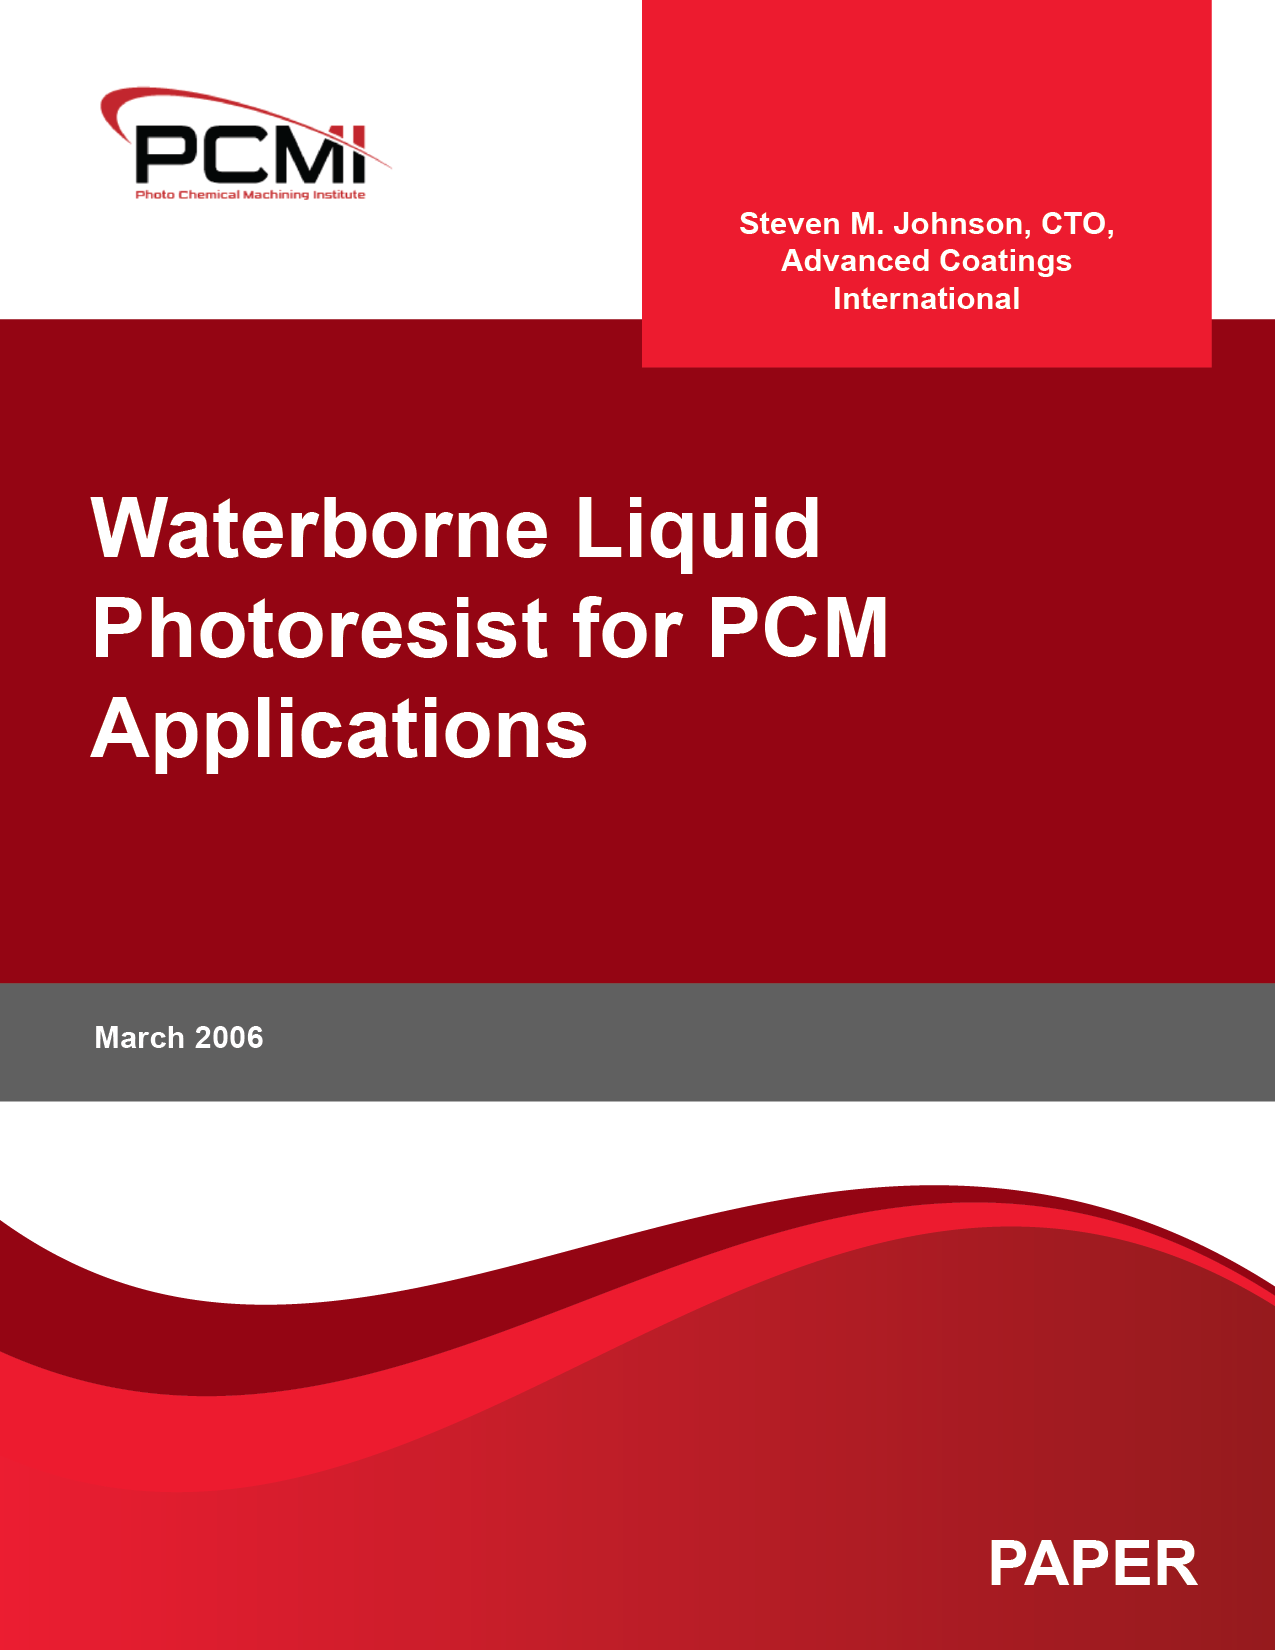 Waterborne Liquid Photoresist for PCM Applications